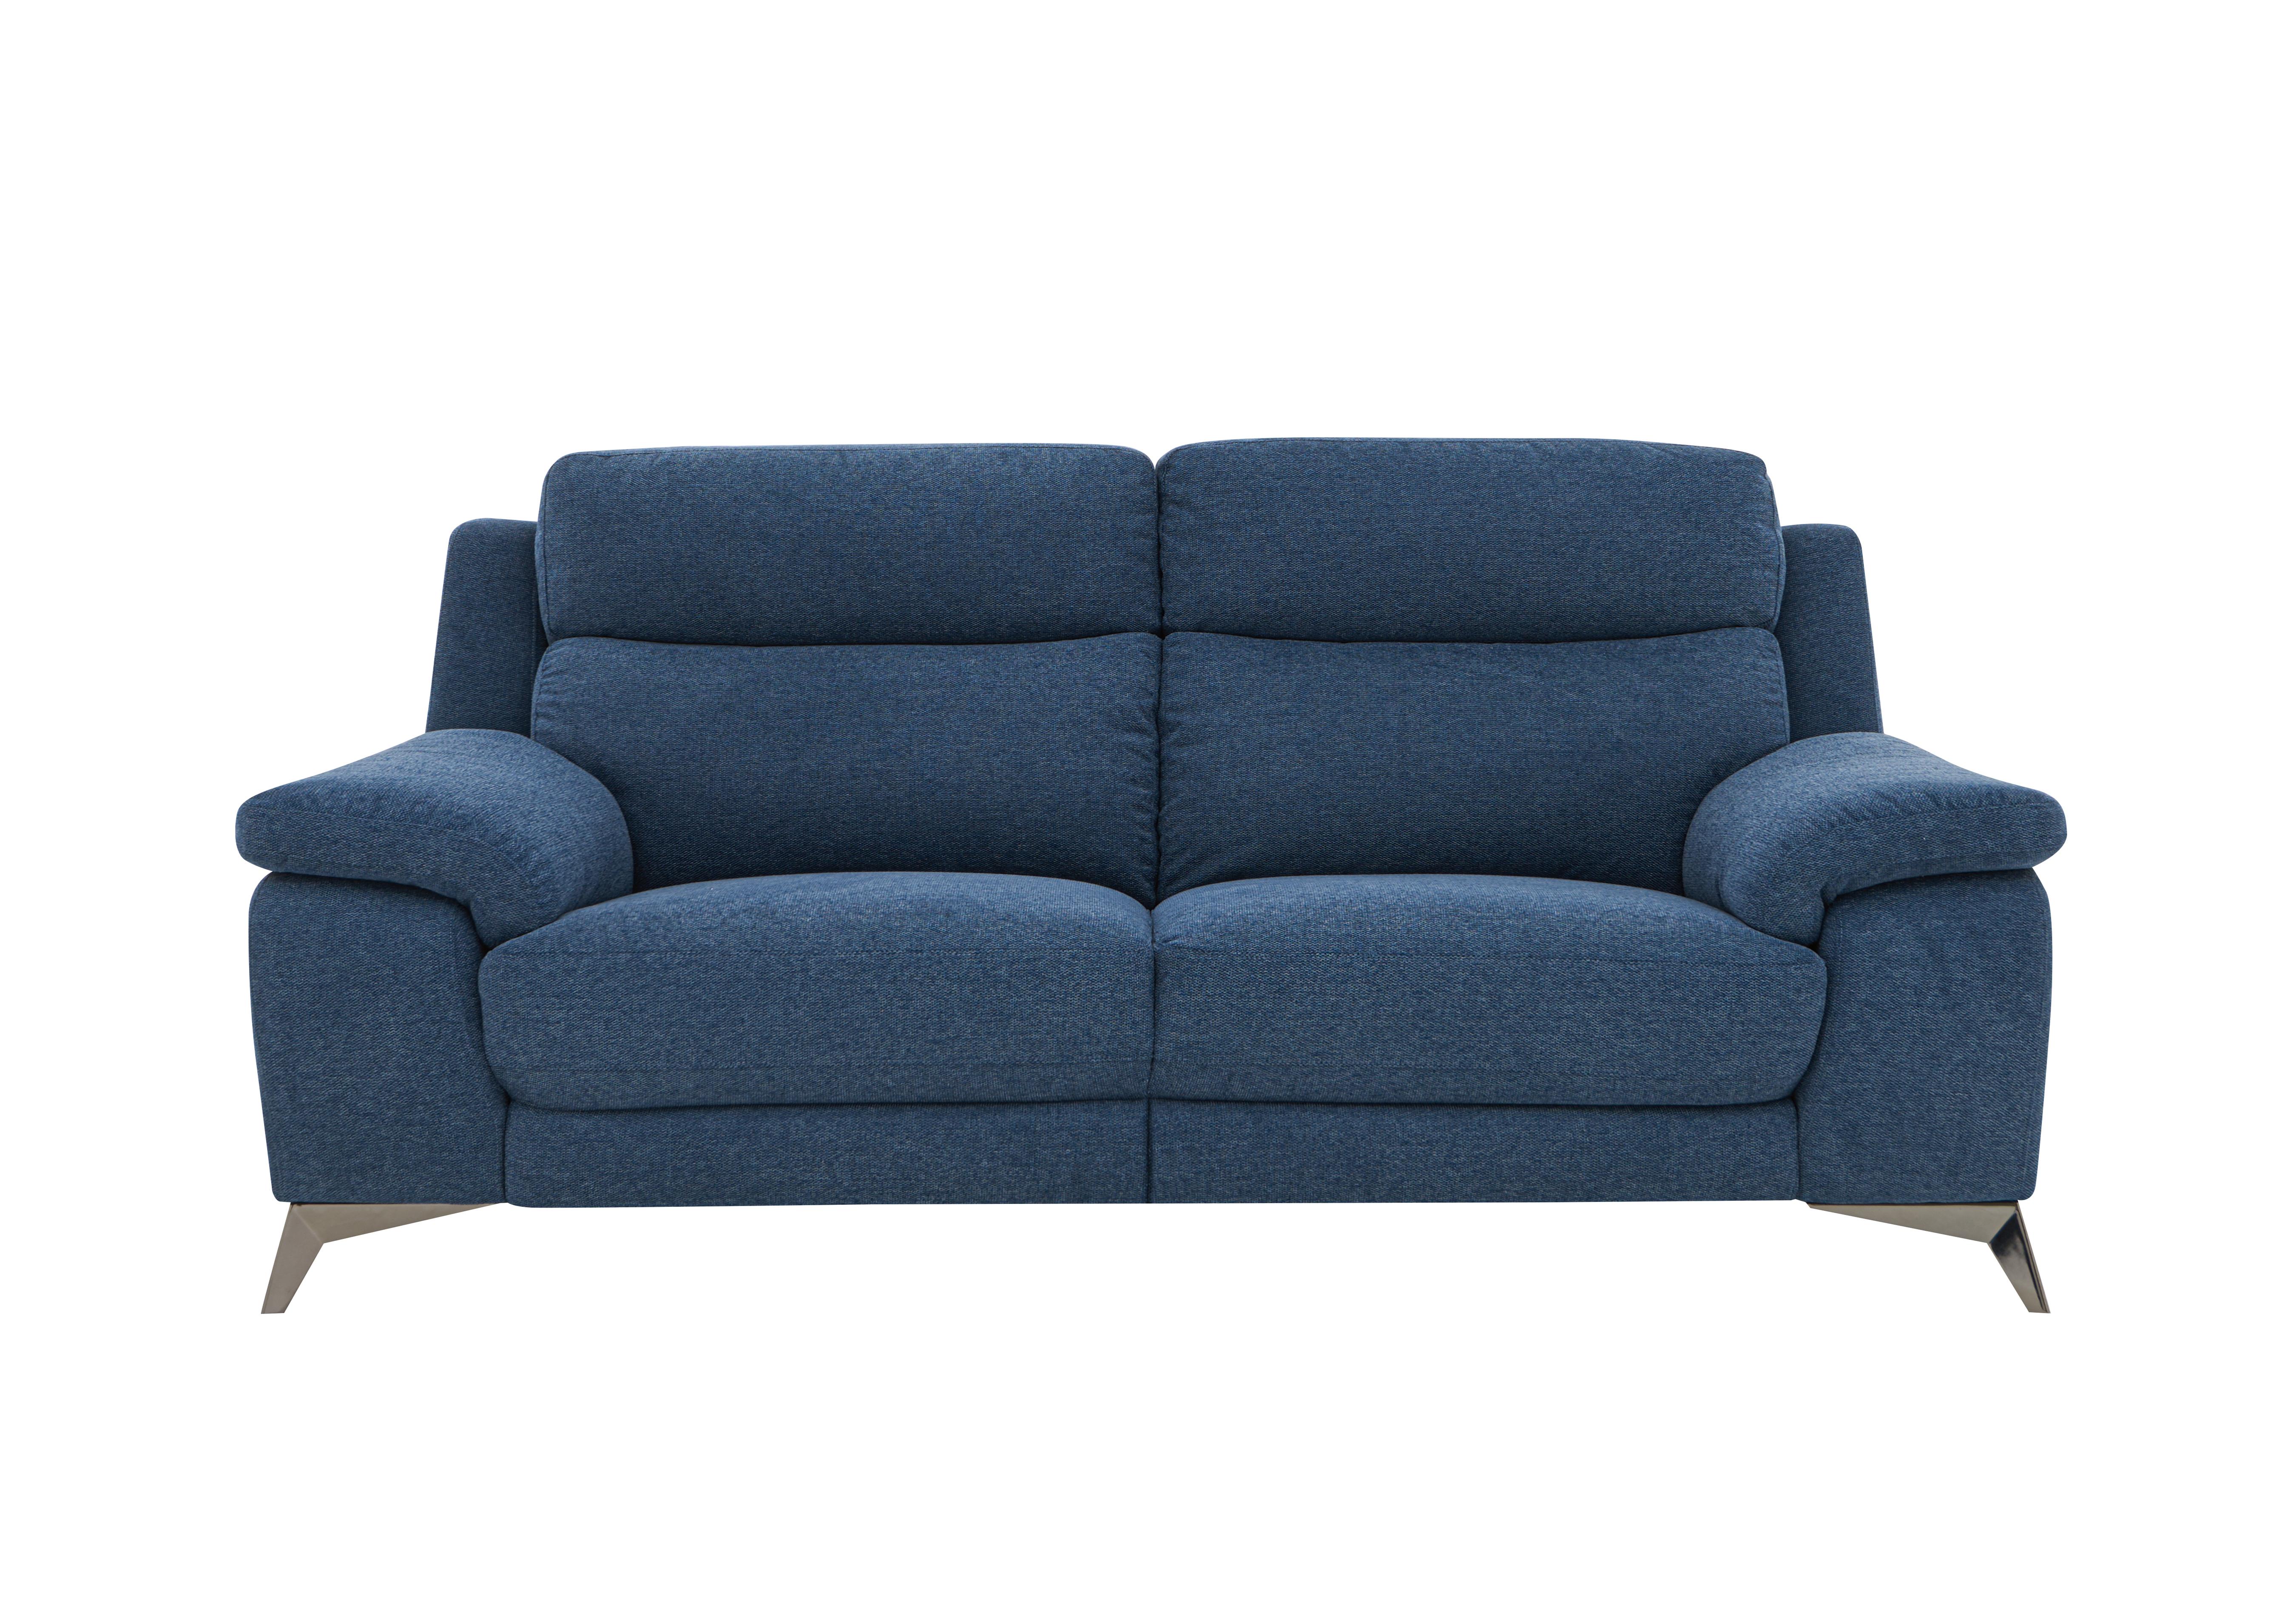 Missouri 3 Seater Fabric Sofa in Fab-Blt-R38 Blue on Furniture Village